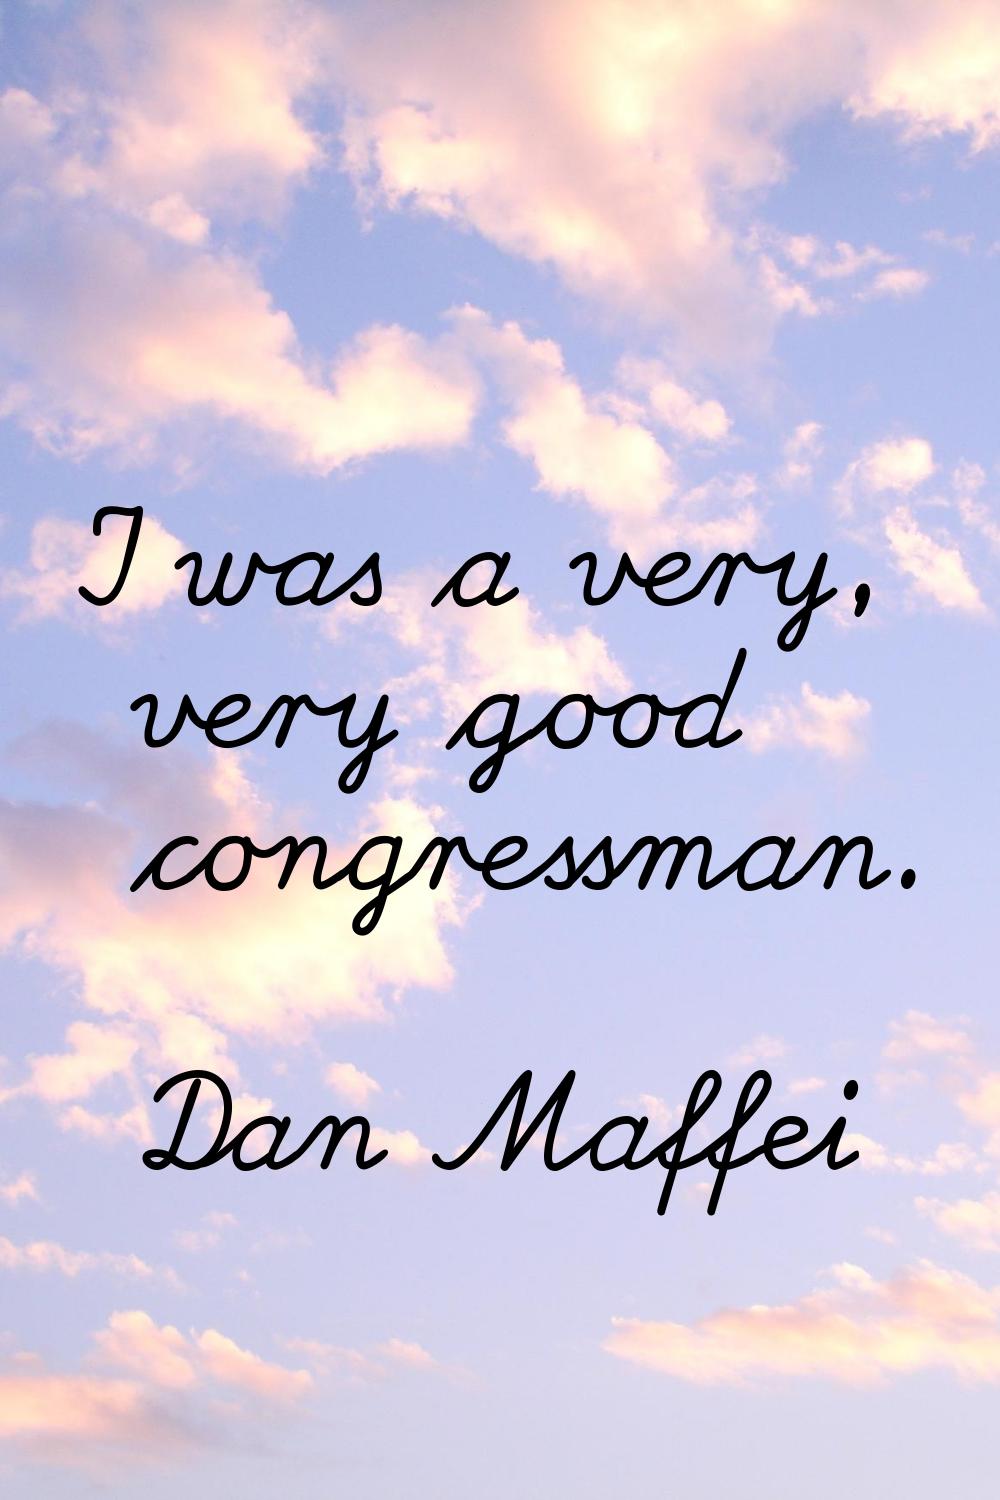 I was a very, very good congressman.